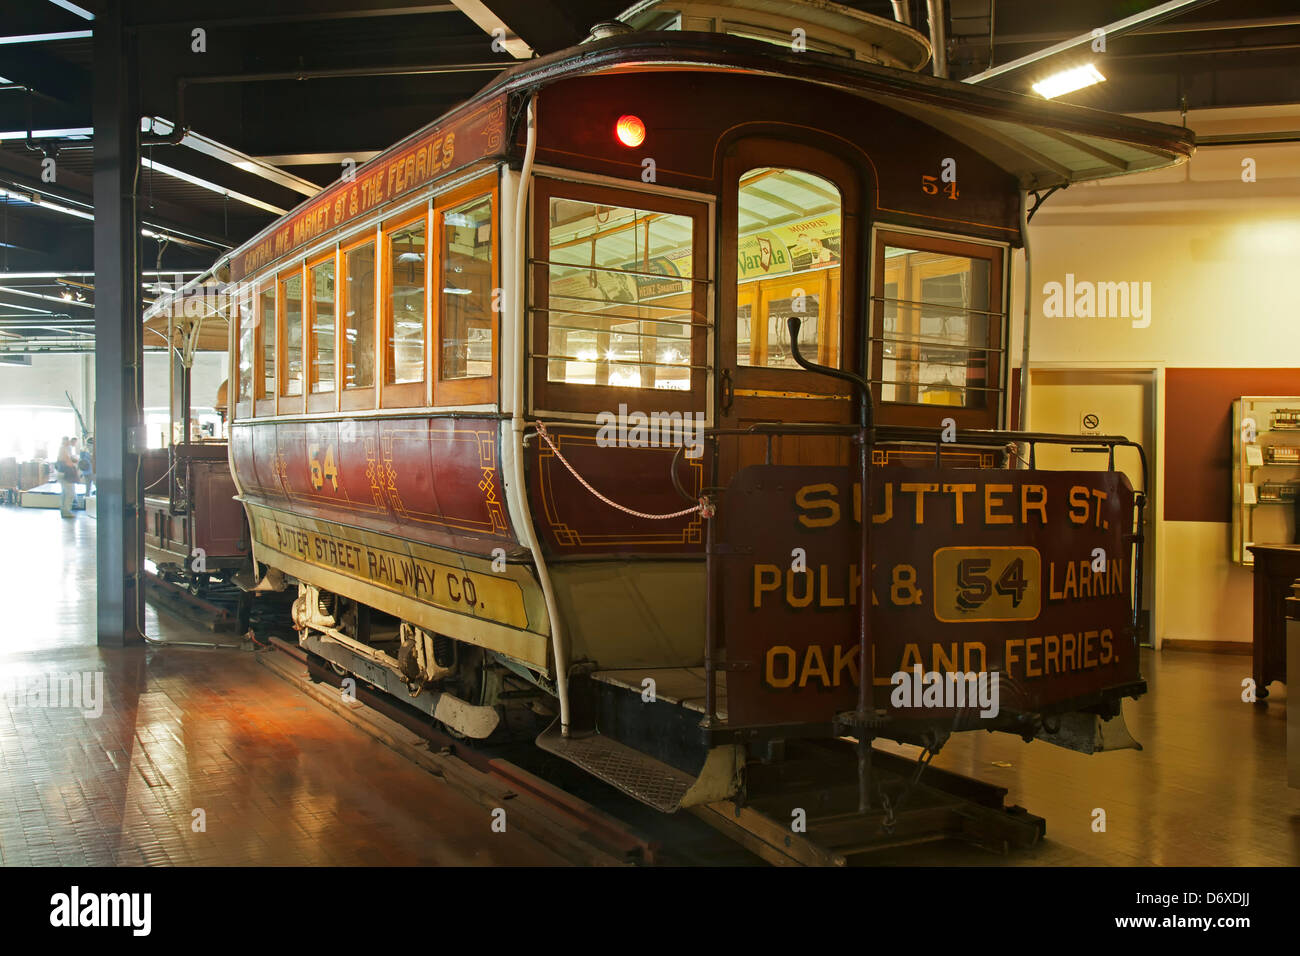 San francisco cable car museum fotografías e imágenes de alta resolución -  Alamy